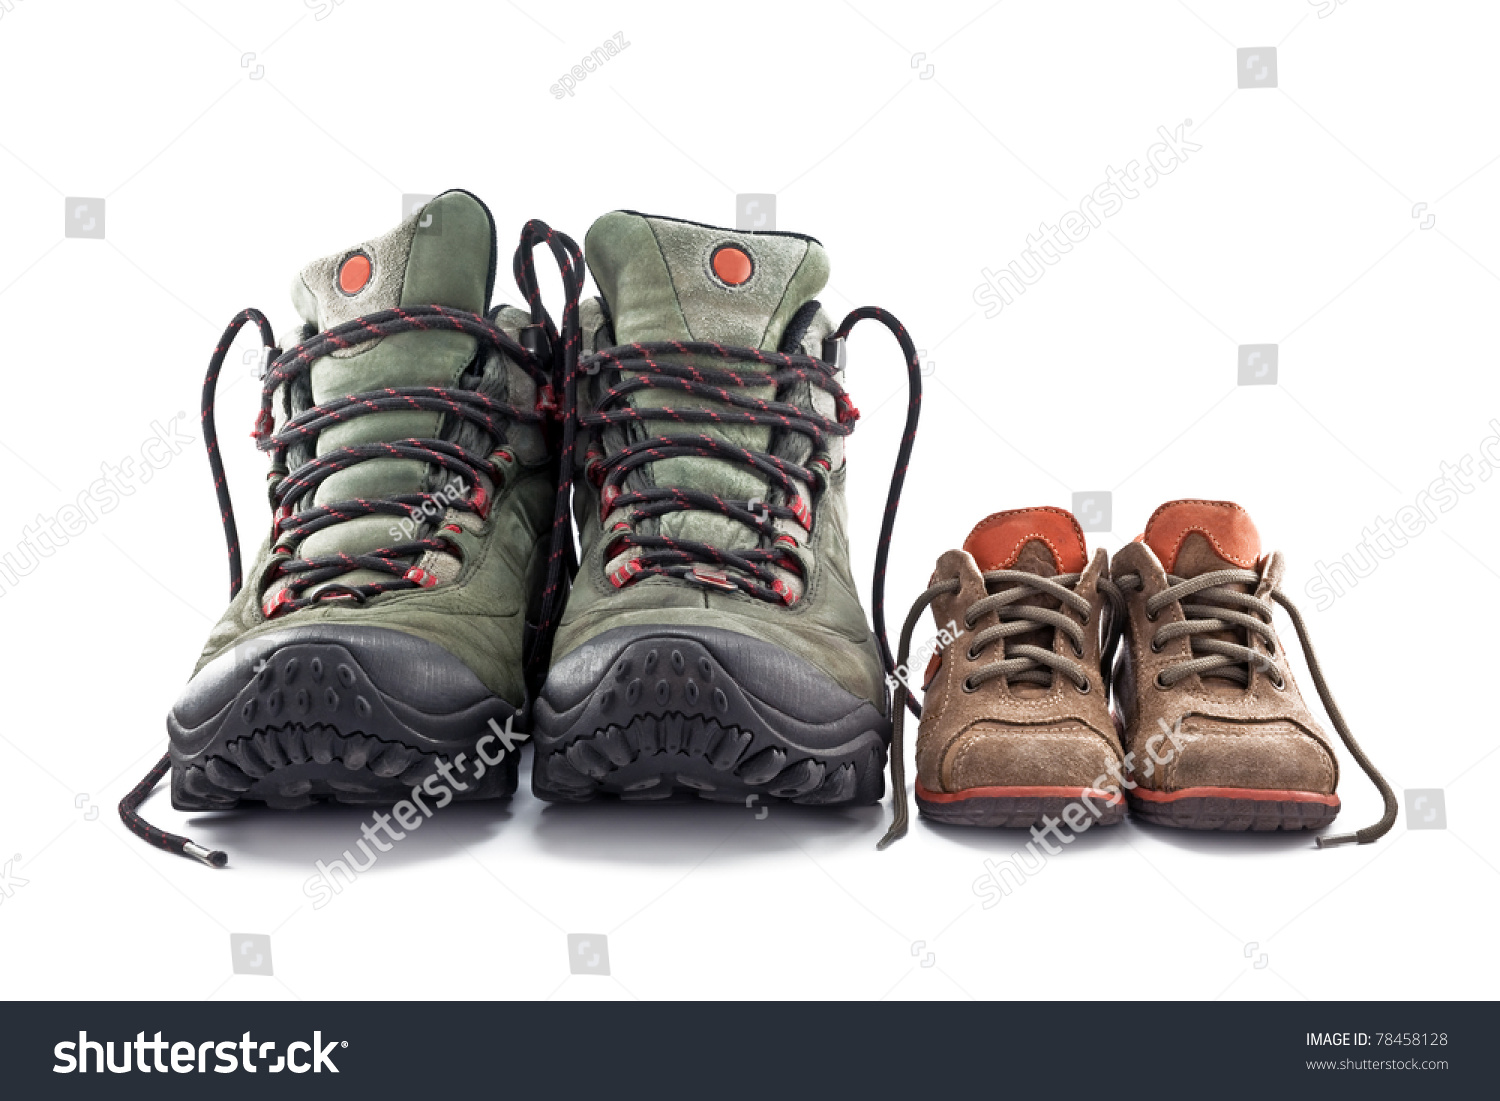 children's hiking boots